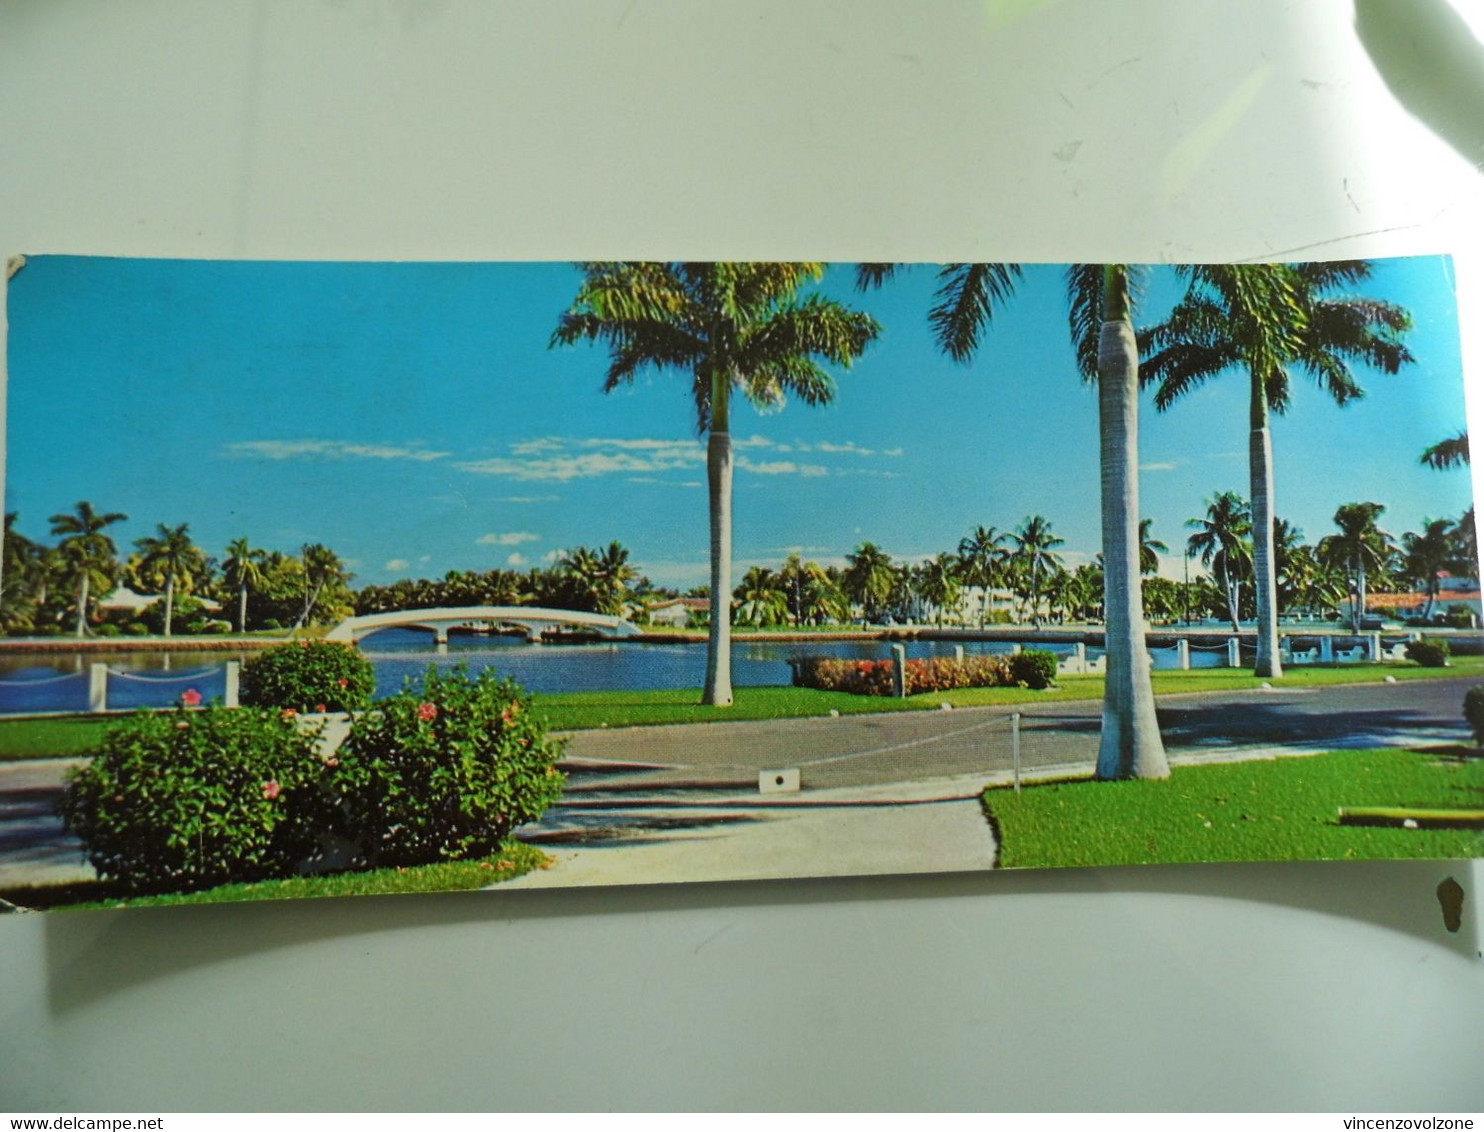 Cartolina Viaggiata Panoramica "BEAUTIFUL BRIGDES AND CANALS IN FORT LAUDERDALE" 1962 - Fort Lauderdale